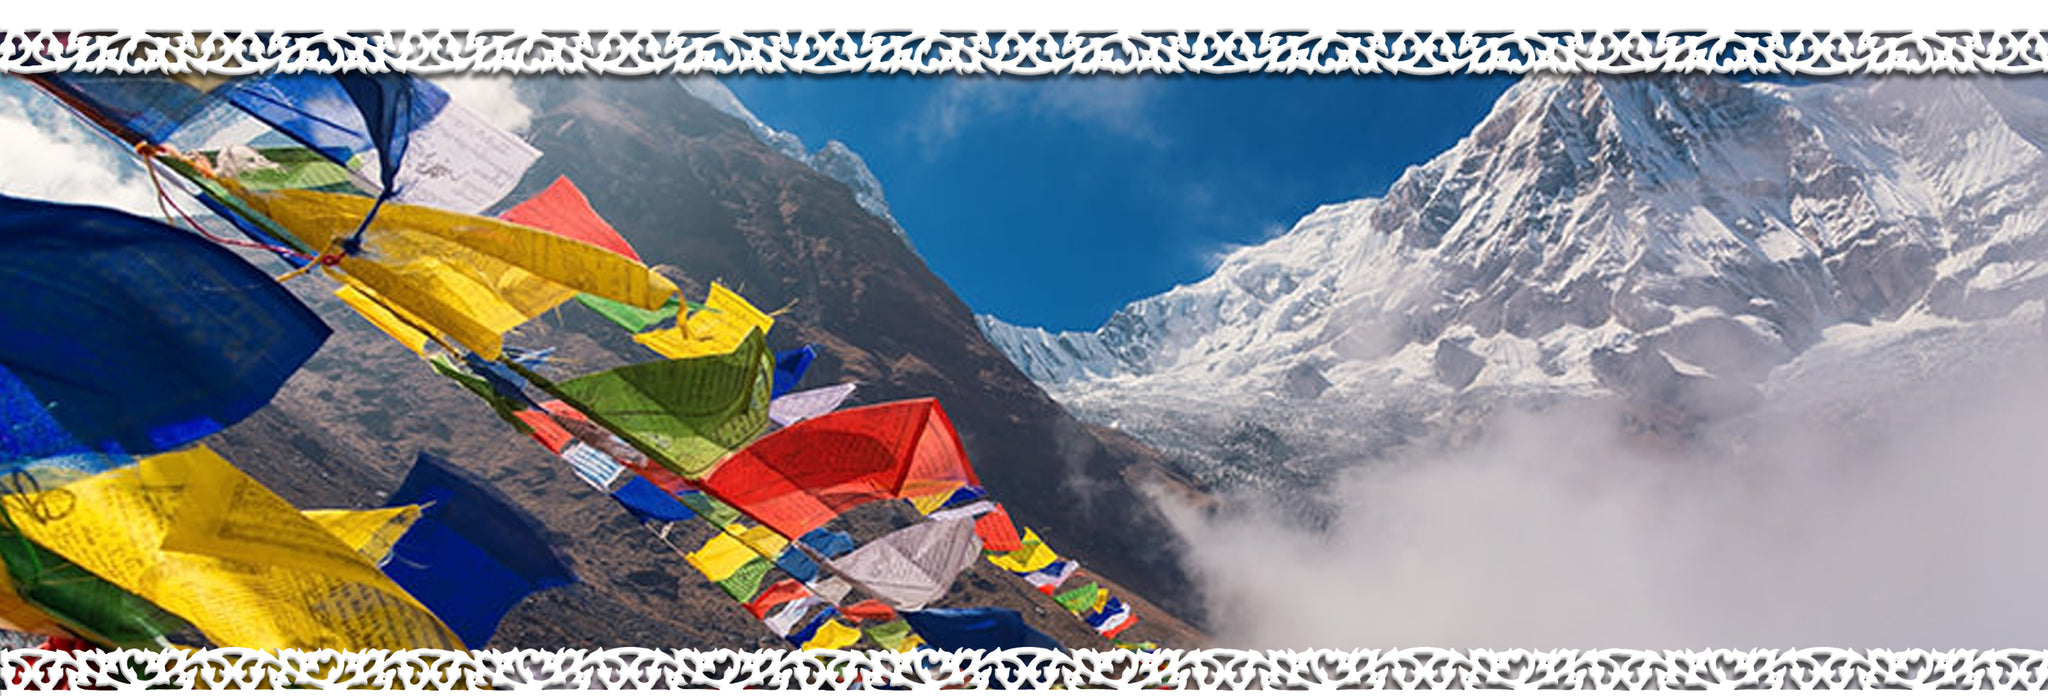 alexanderlawnde Nepal Collection Image